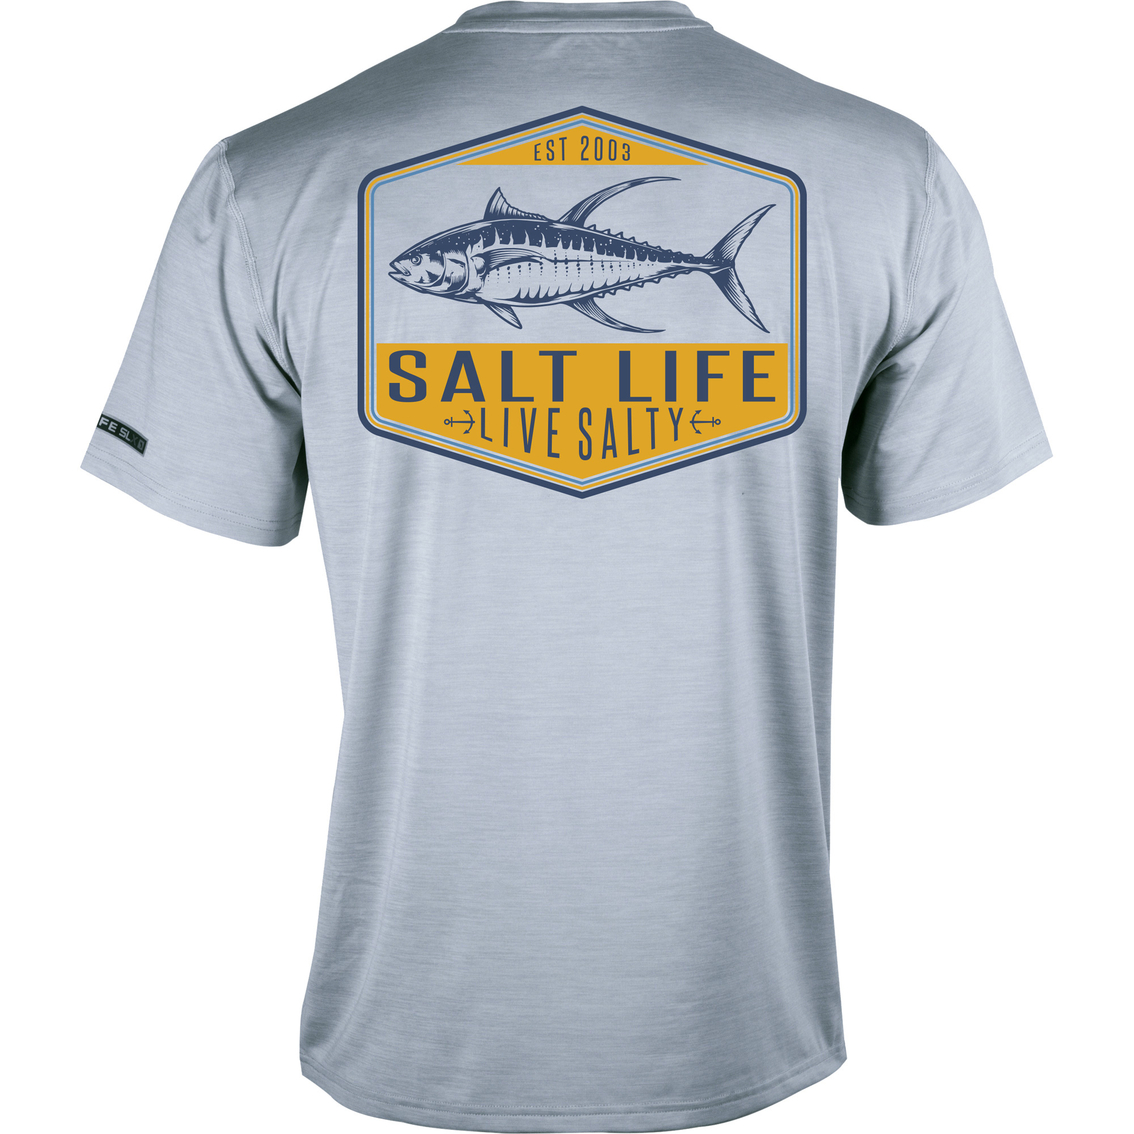 Salt Life Tunability Performance Pocket Tee | Shirts | Clothing ...